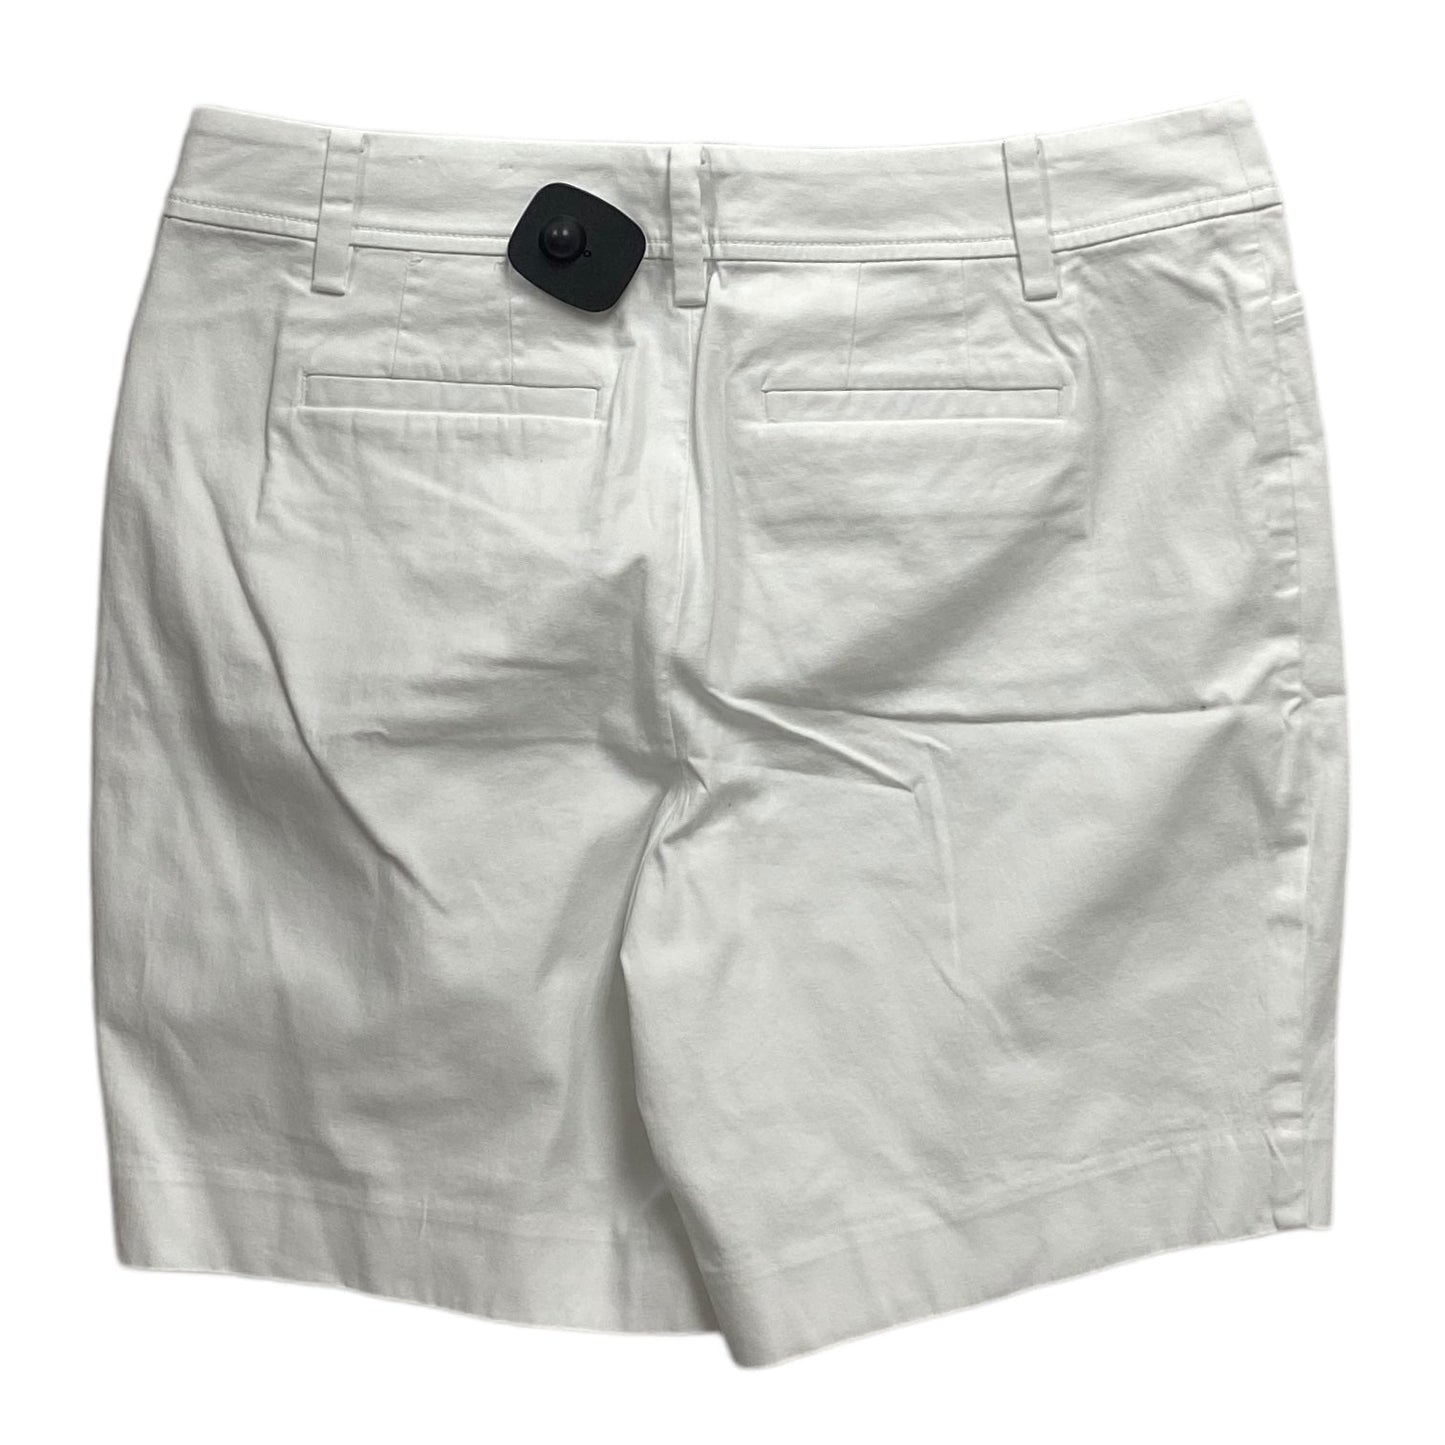 White Shorts Talbots, Size 8petite